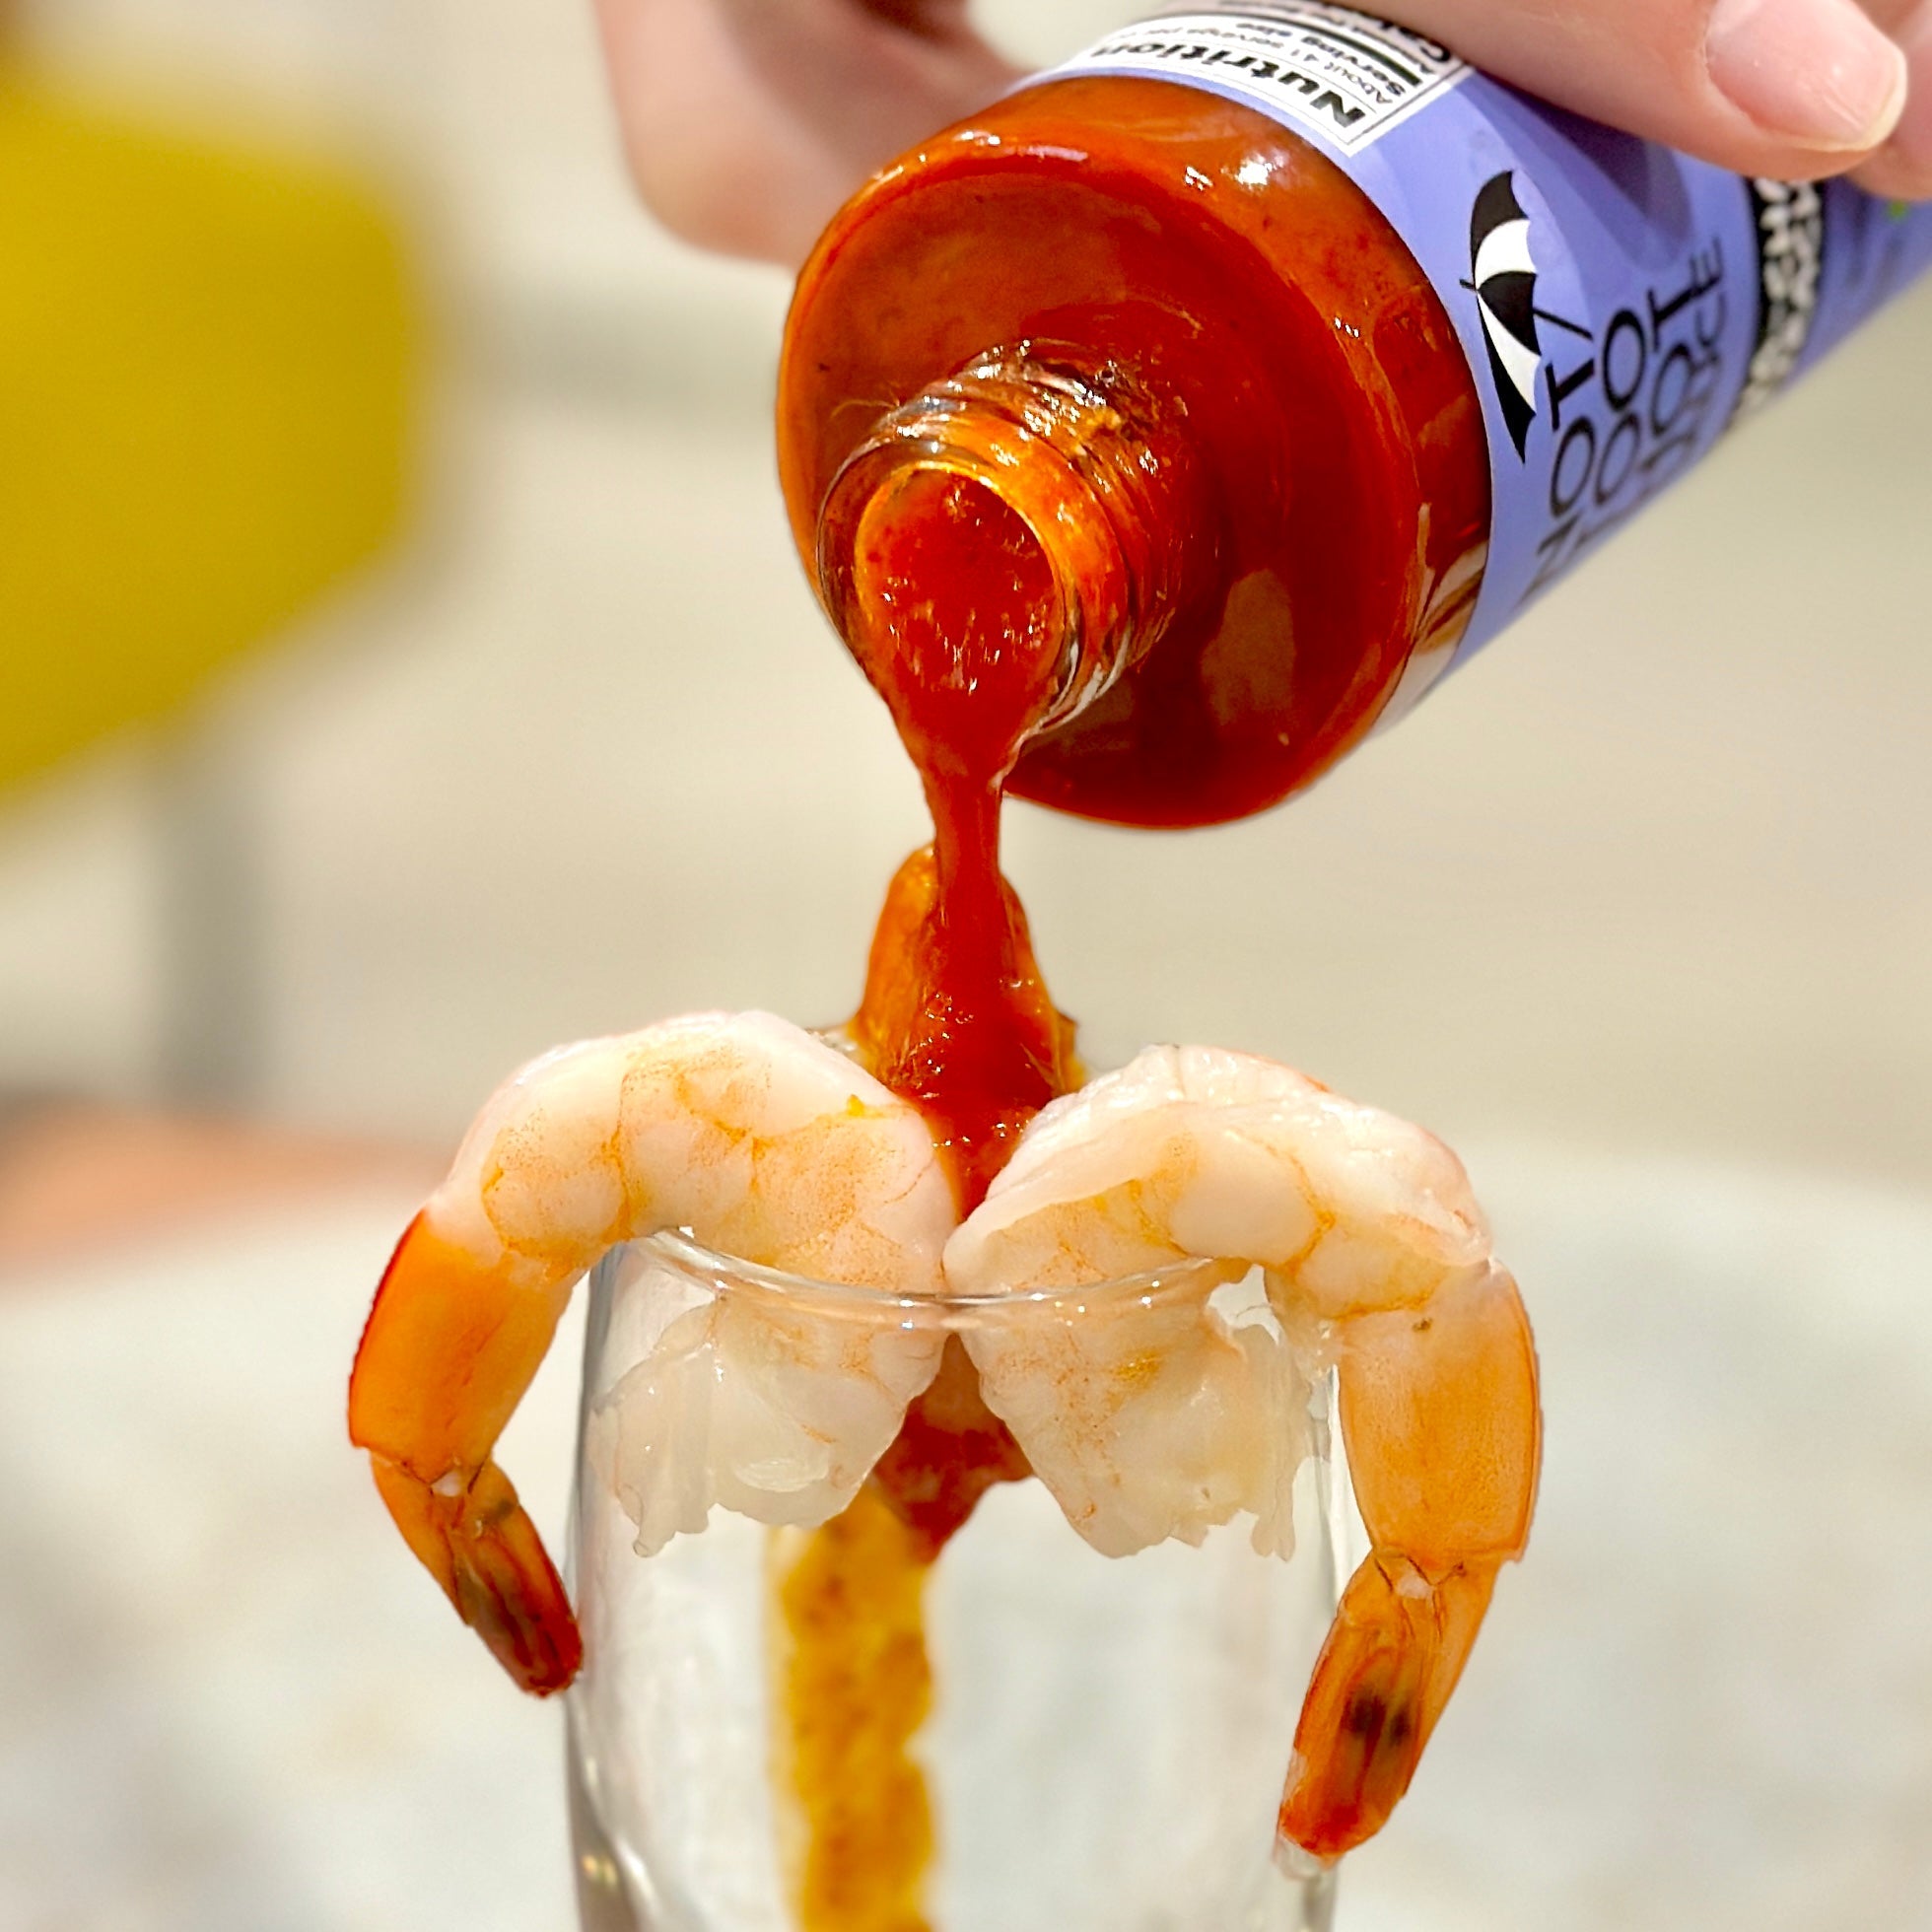 Cha-Cha-Sriracha 7 oz. Sriracha Hot Sauce Not Too Hot Sauce